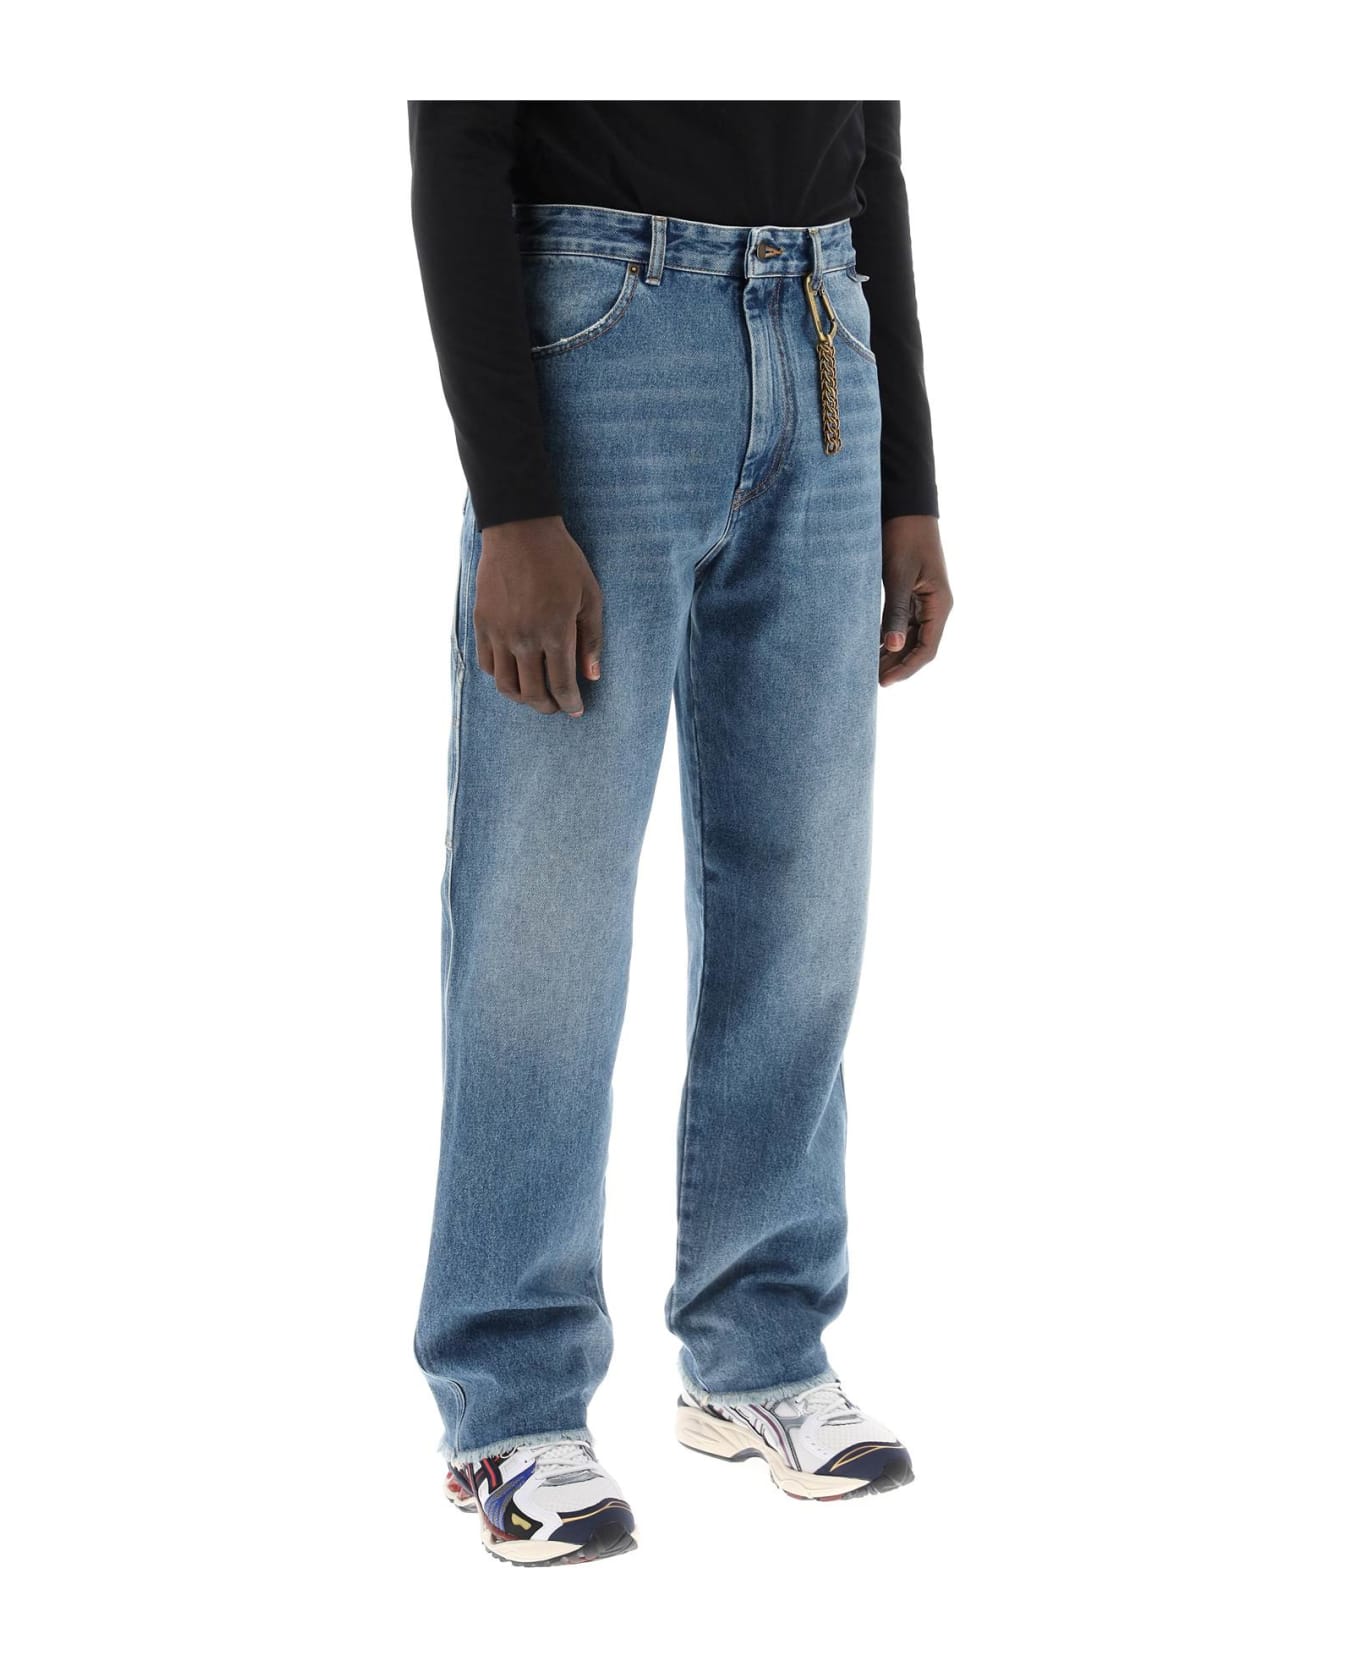 DARKPARK John Workwear Jeans - MEDIUM WASH (Blue) デニム